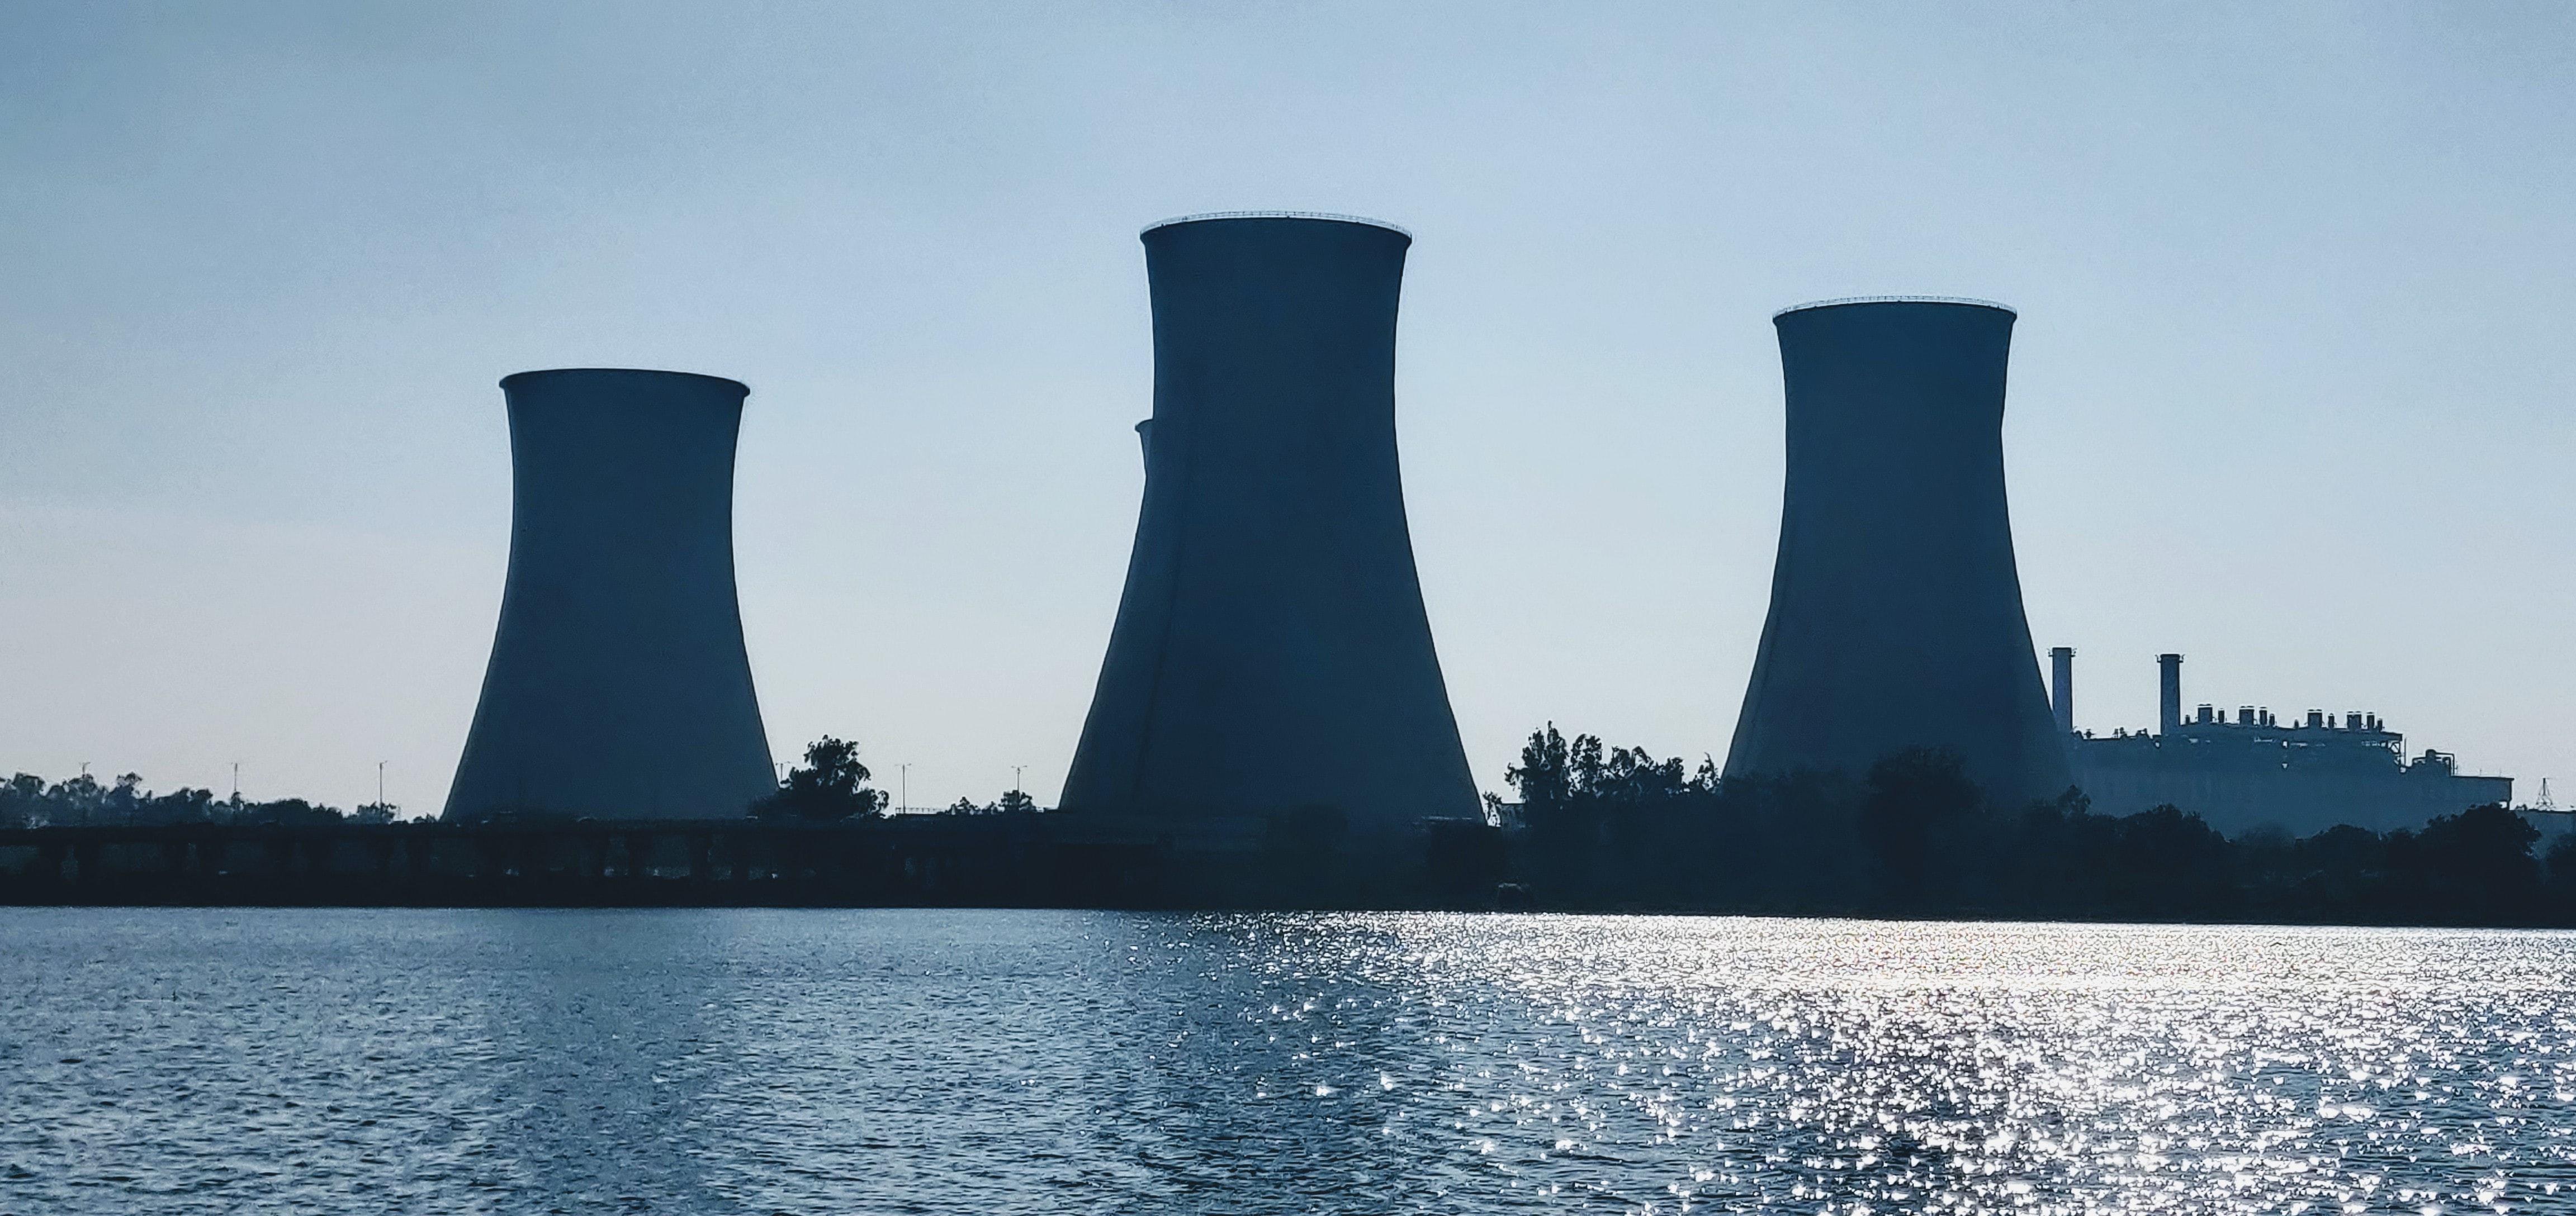 Centrales nucleares Ajay Pal para Unsplash